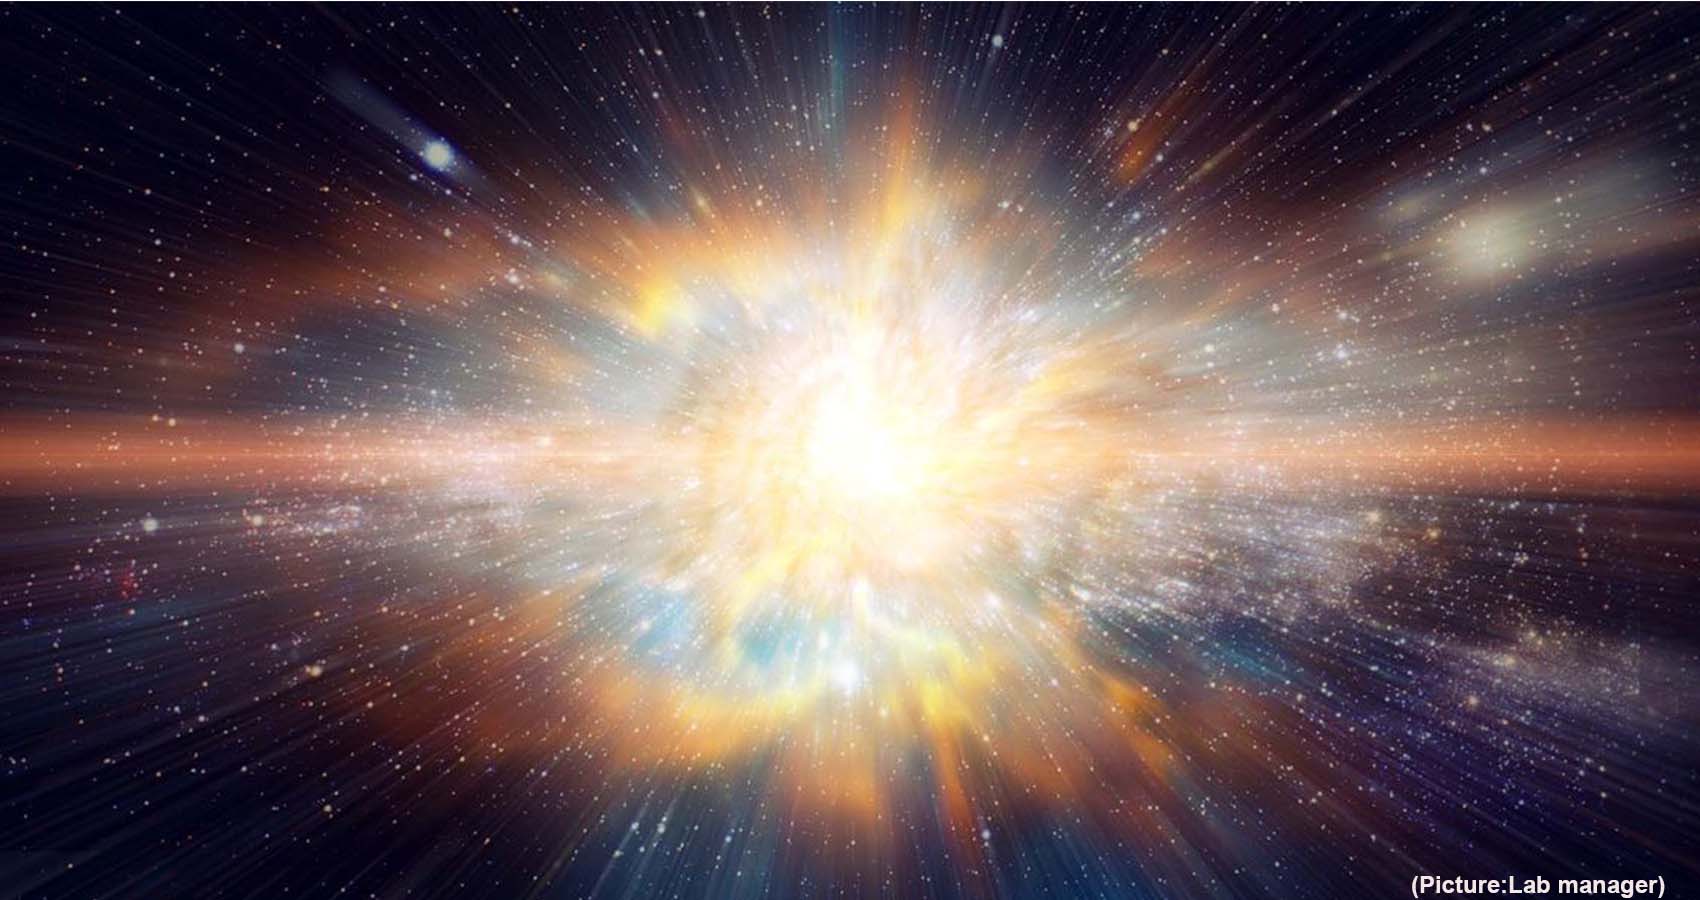 Stellar Collision Triggered Supernova Explosion